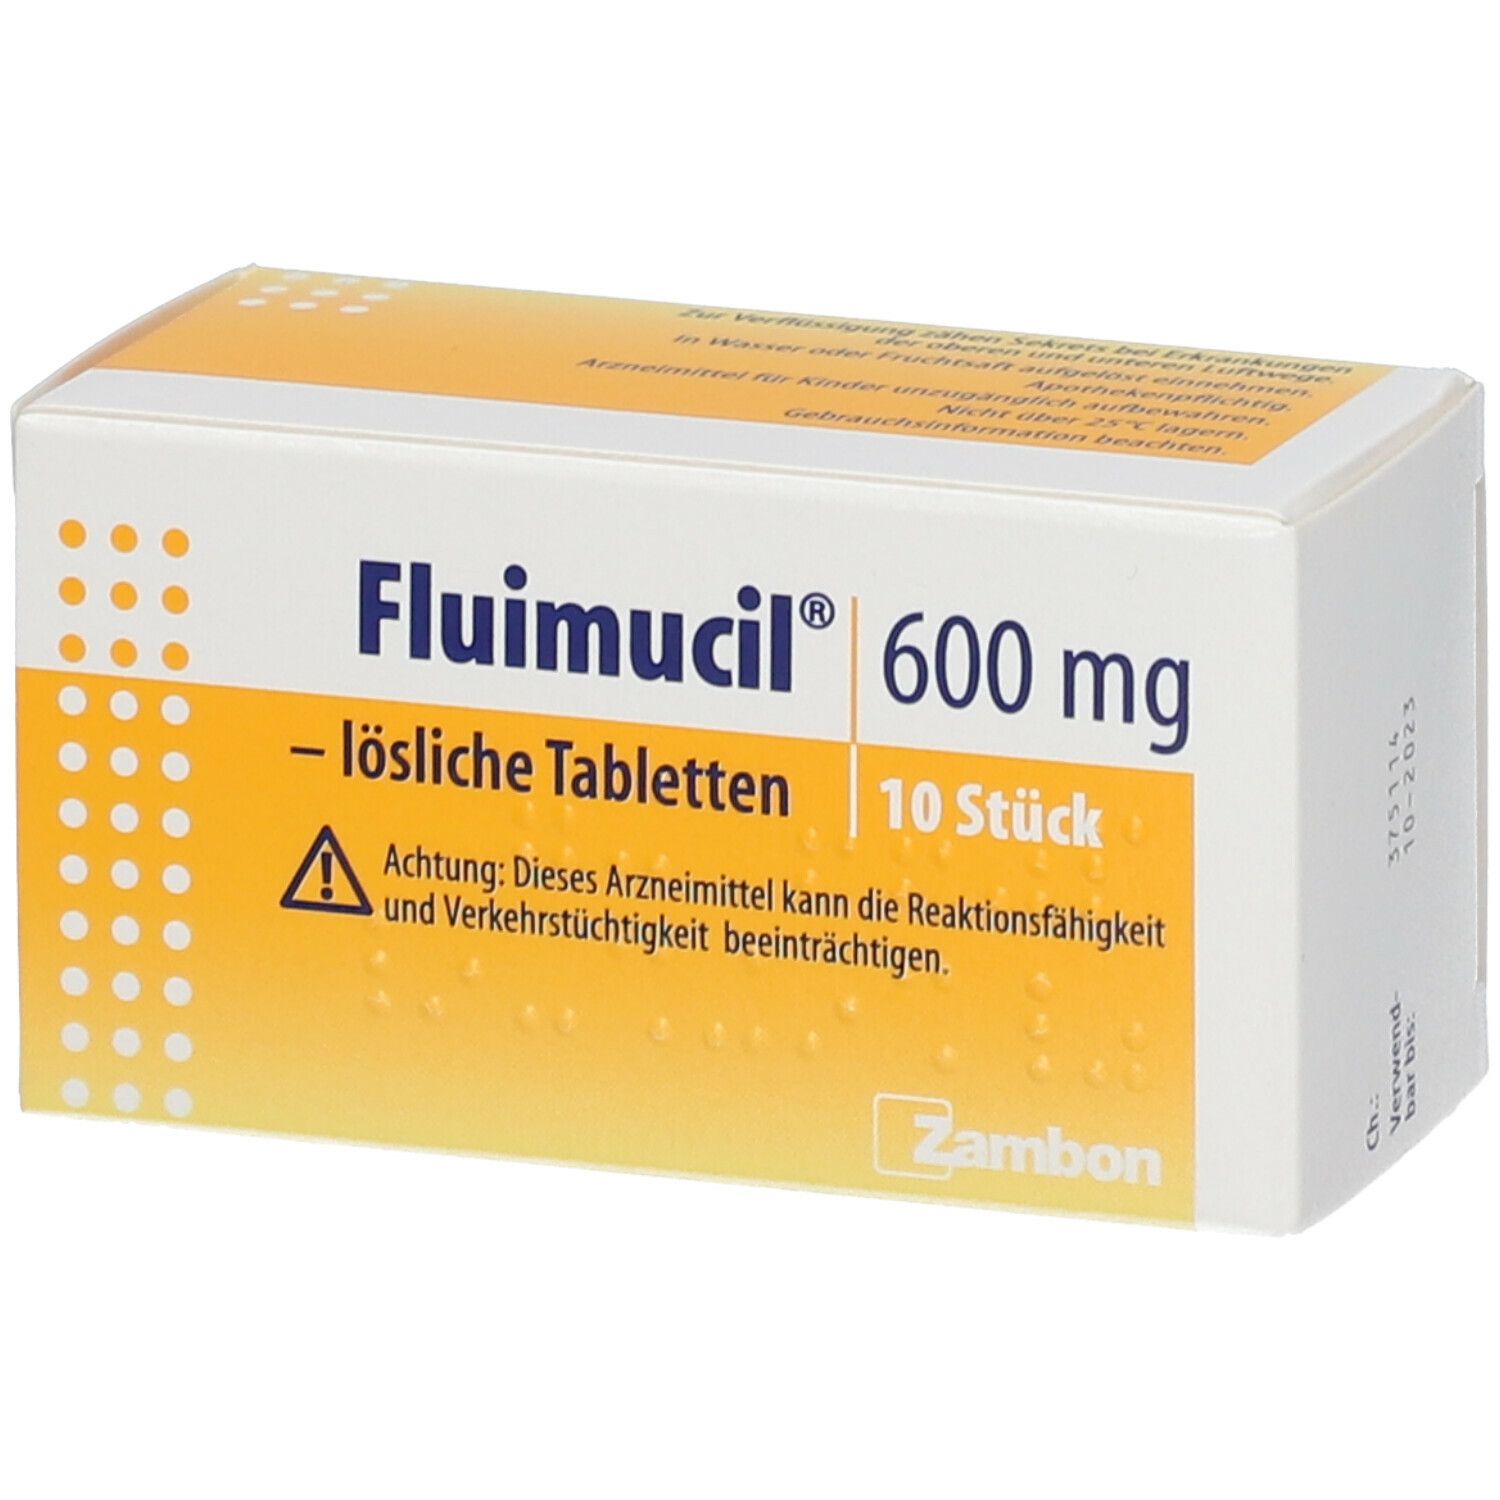 Fluimucil® 600 mg lösliche Tabletten